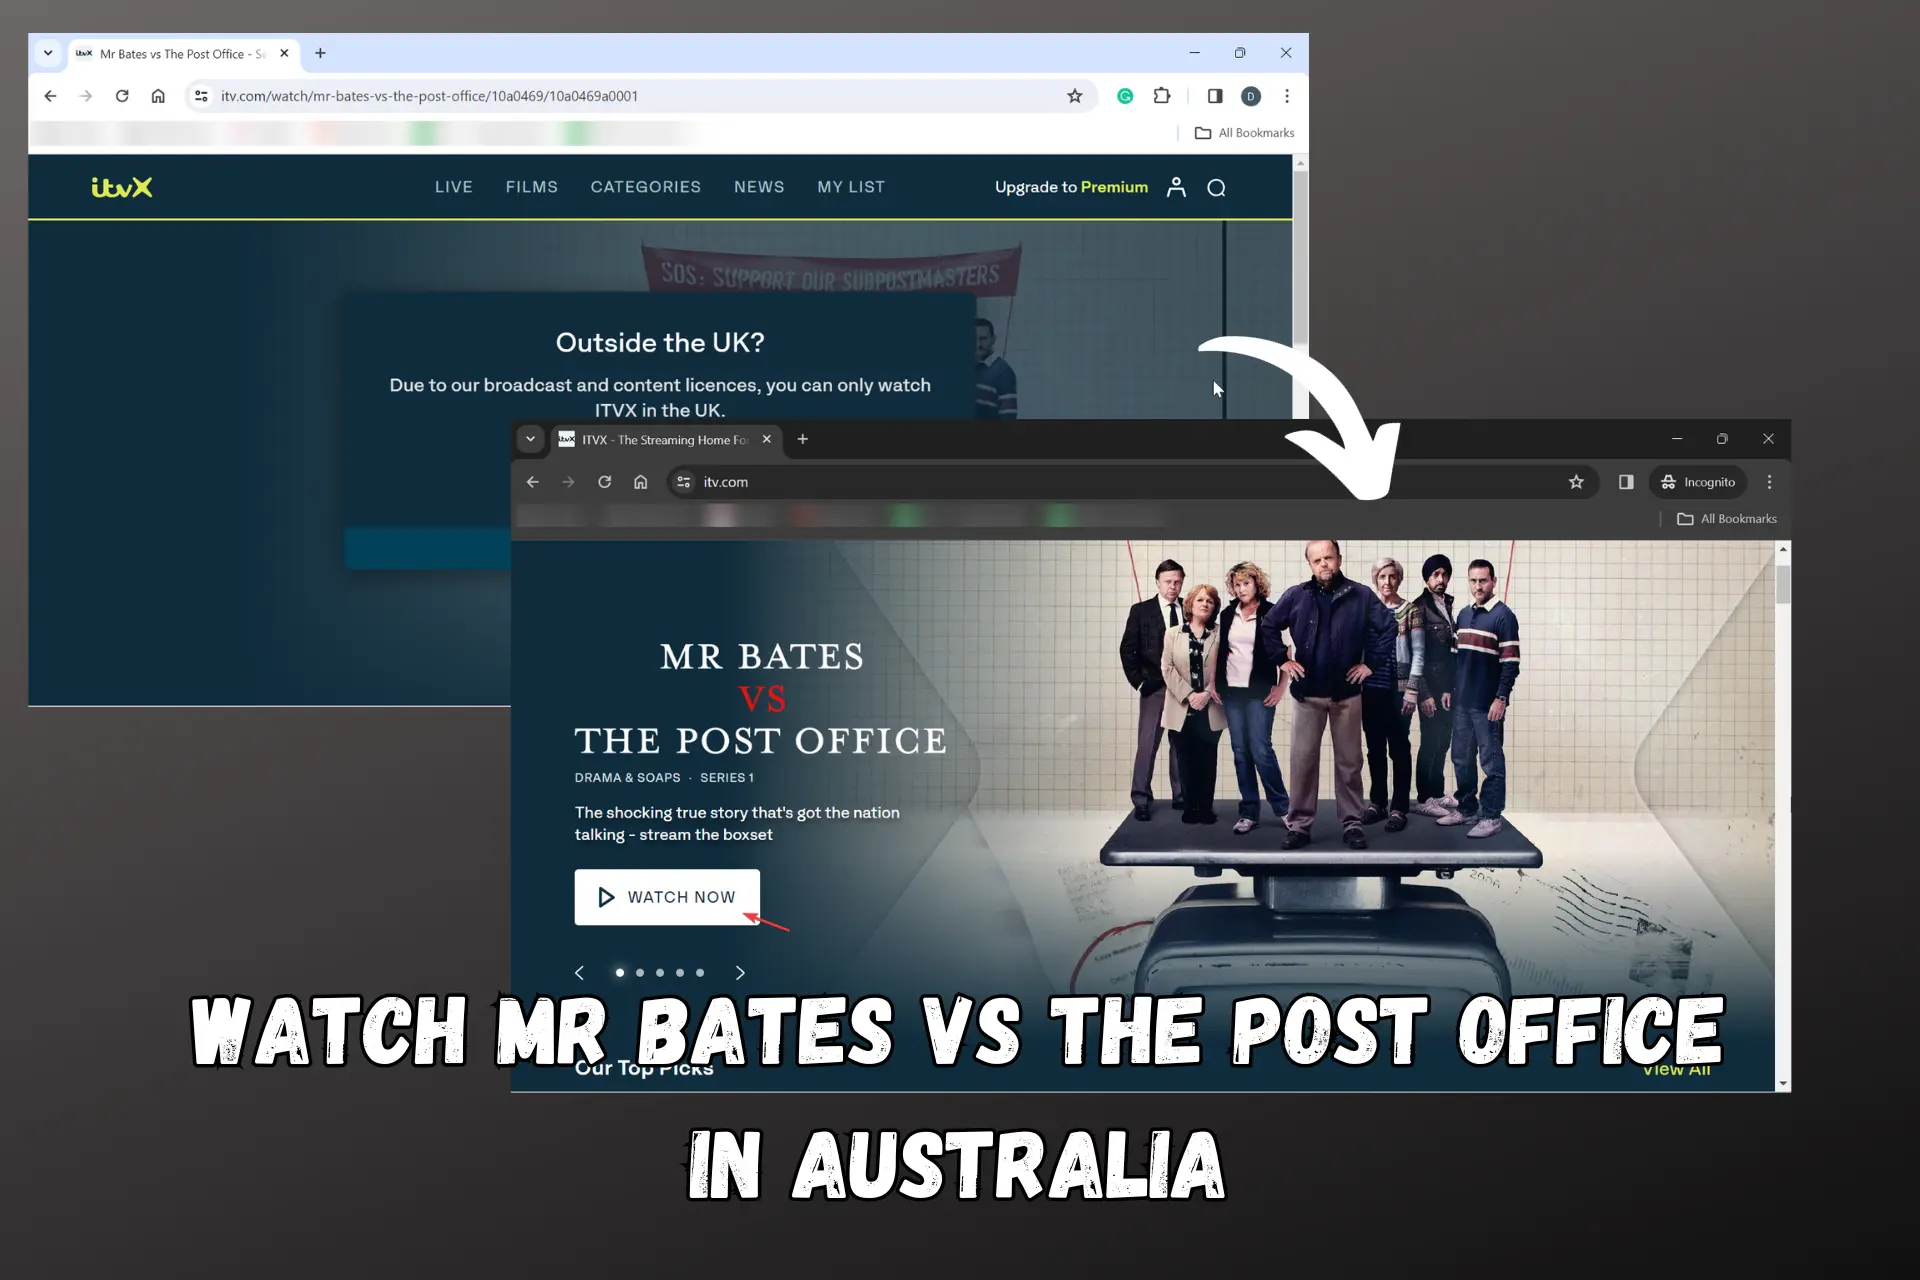 WATCH MR BATES VS THE POST OFFICE IN AUSTRALIA